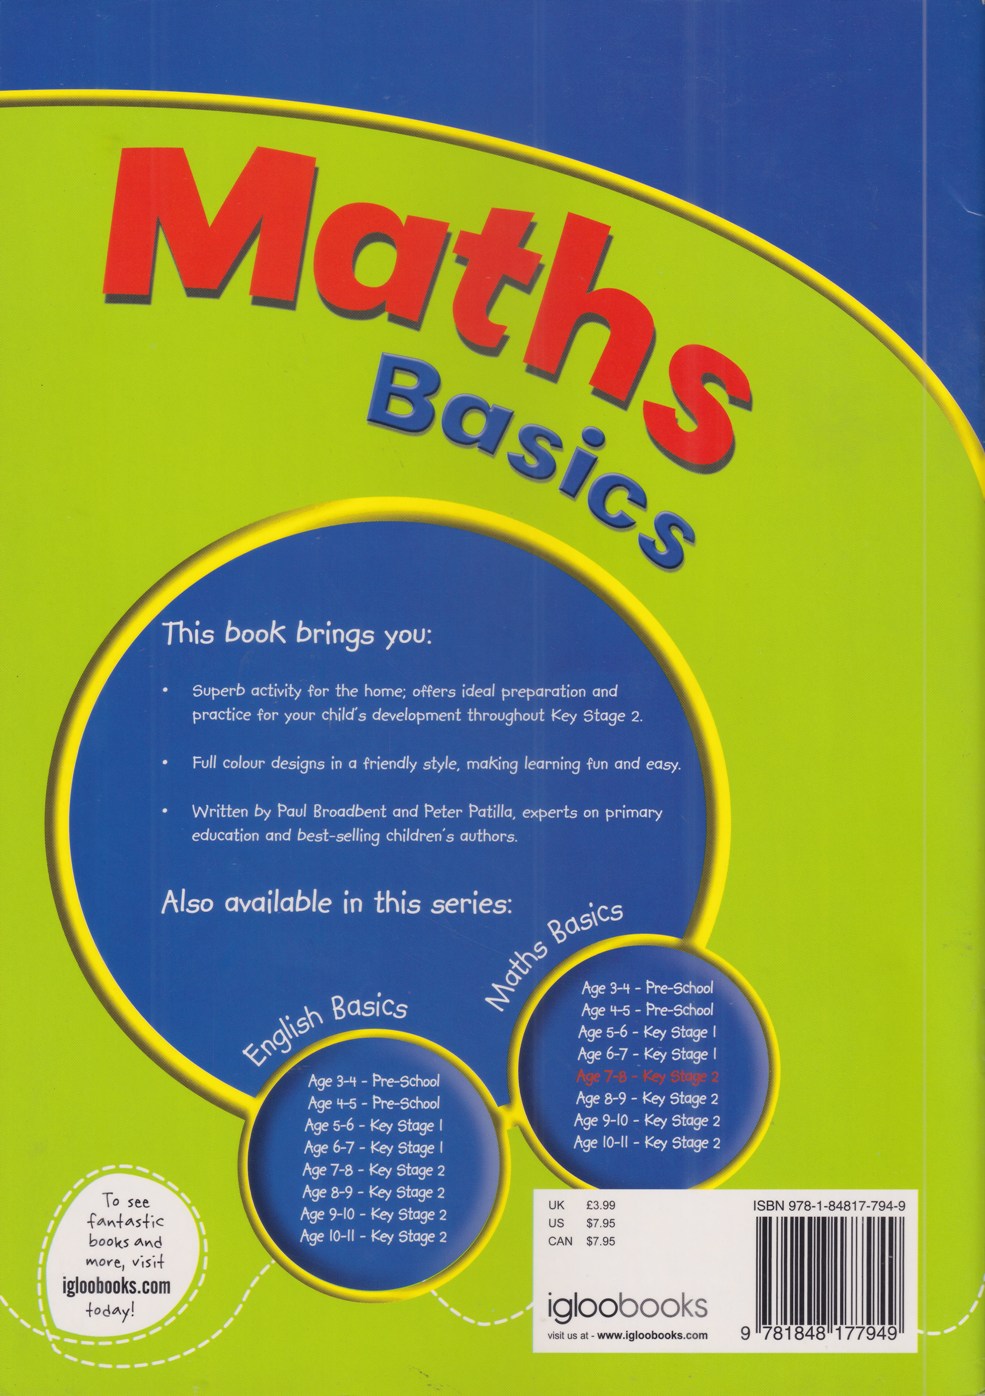 Leap Ahead Maths Basics Age 7-8